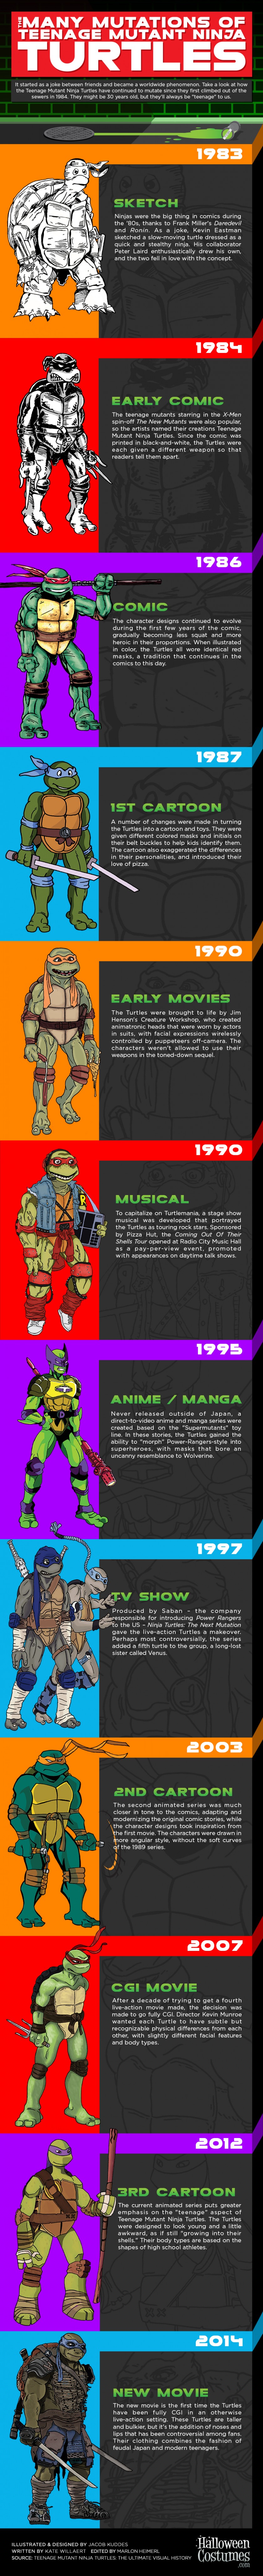 TMNT- Tortues Ninja - 1983 - 2014 - Infographic